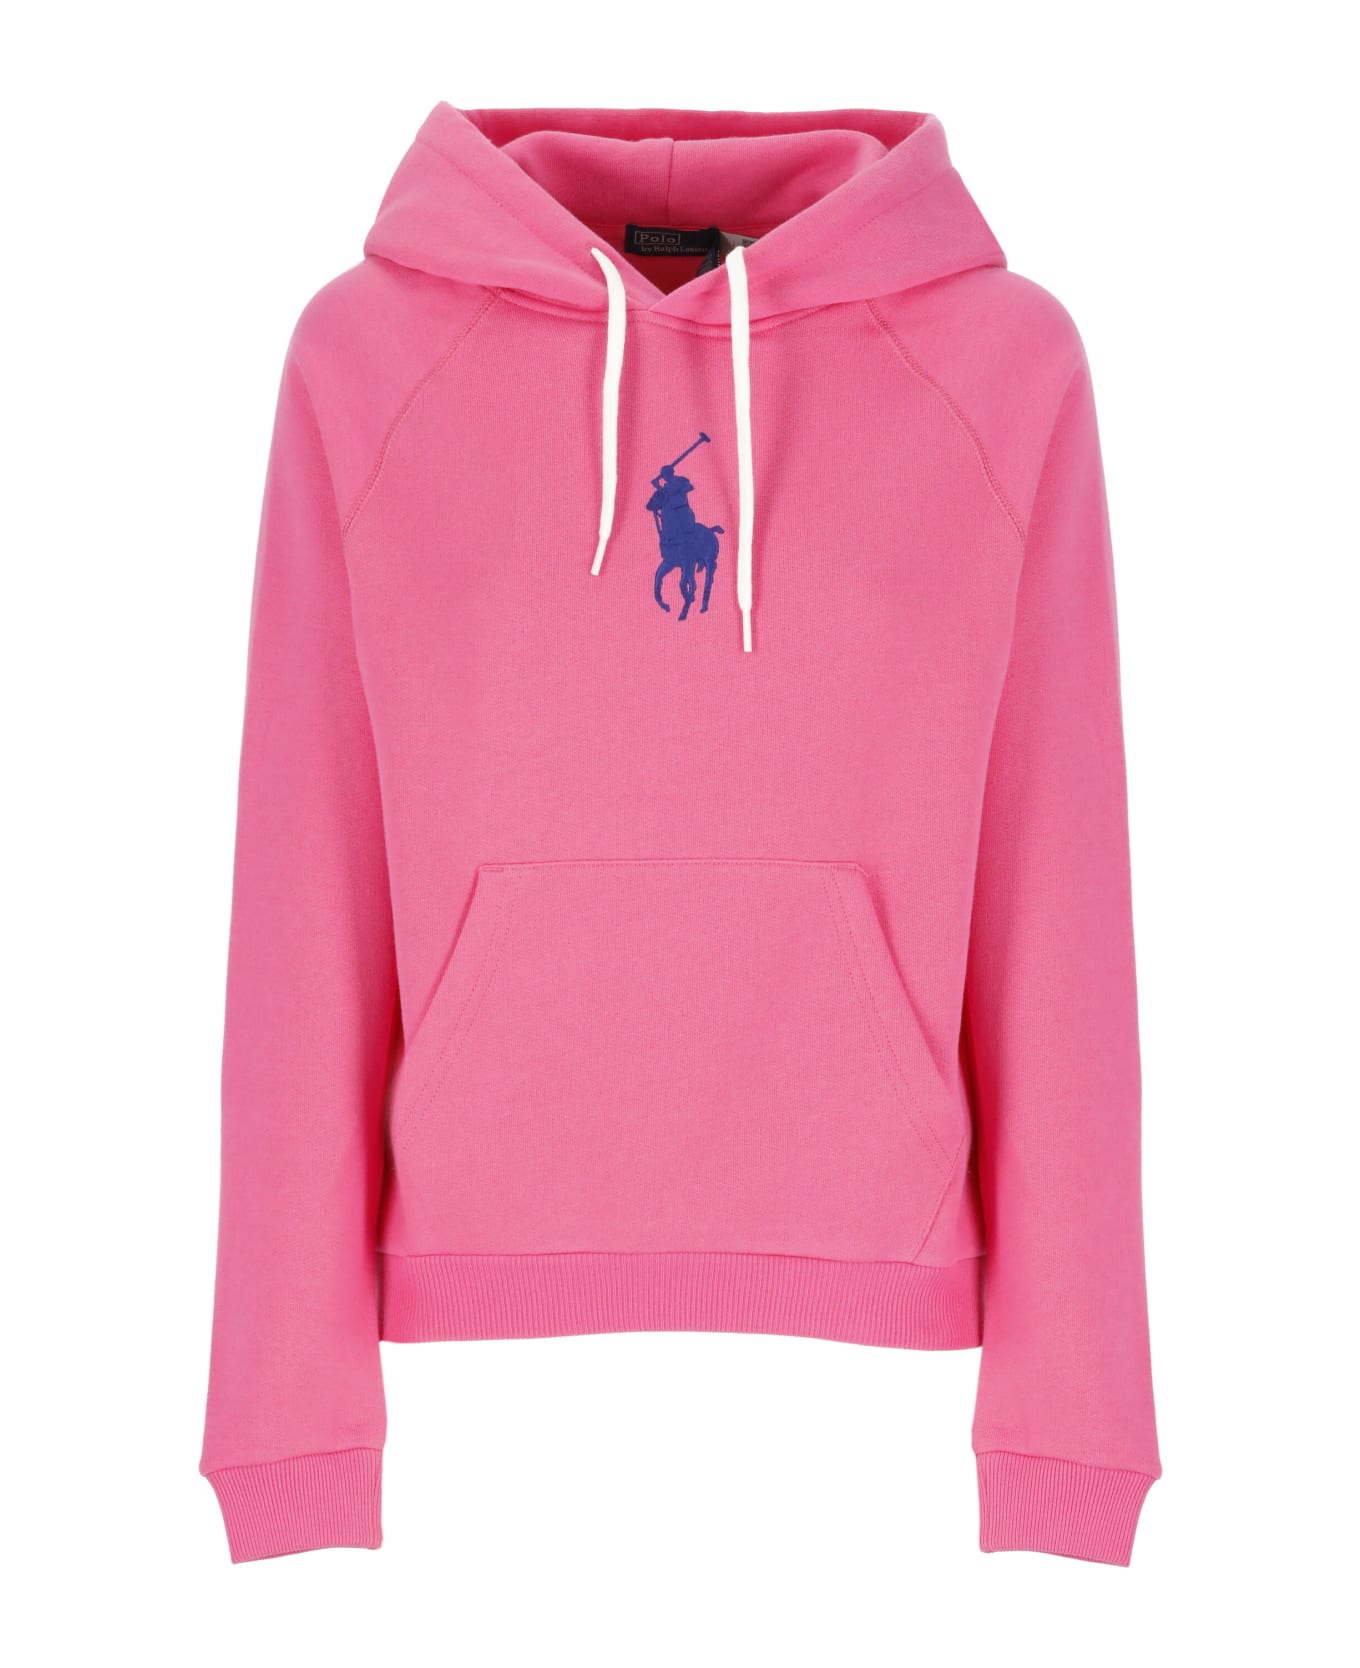 Ralph Lauren Fuchsia Cotton Blend Sweatshirt - Pink